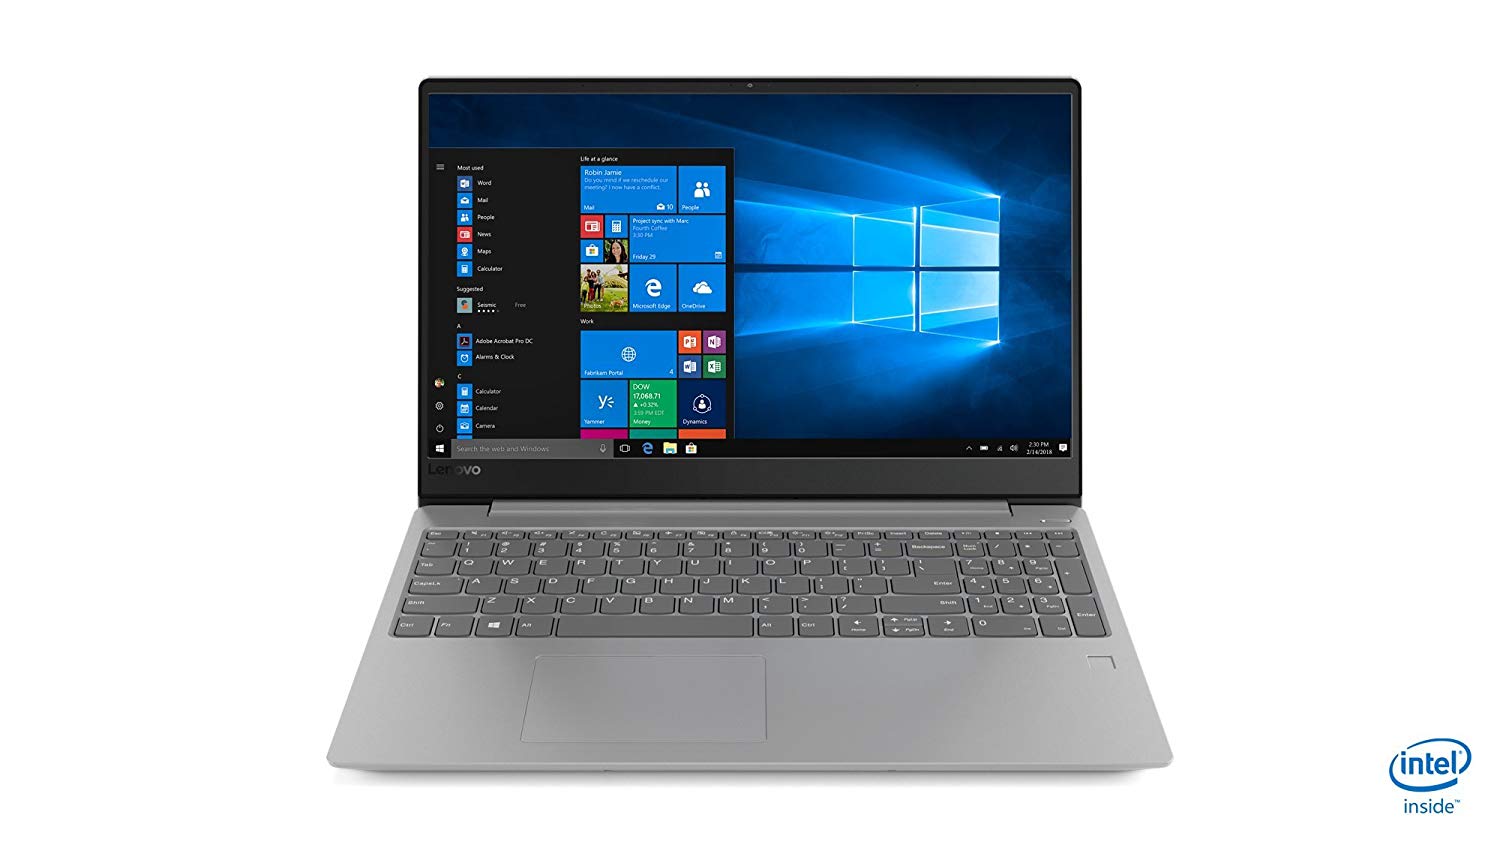 Lenovo Ideapad 330S-15IKB 81F500BXIN 15.6-inch Full HD Laptop (8th Gen I5-8250U/8GB DDR4/1TB HDD/Windows 10 Home/Office Home & Student 2016/4GB AMD Graphics), Platinum Grey